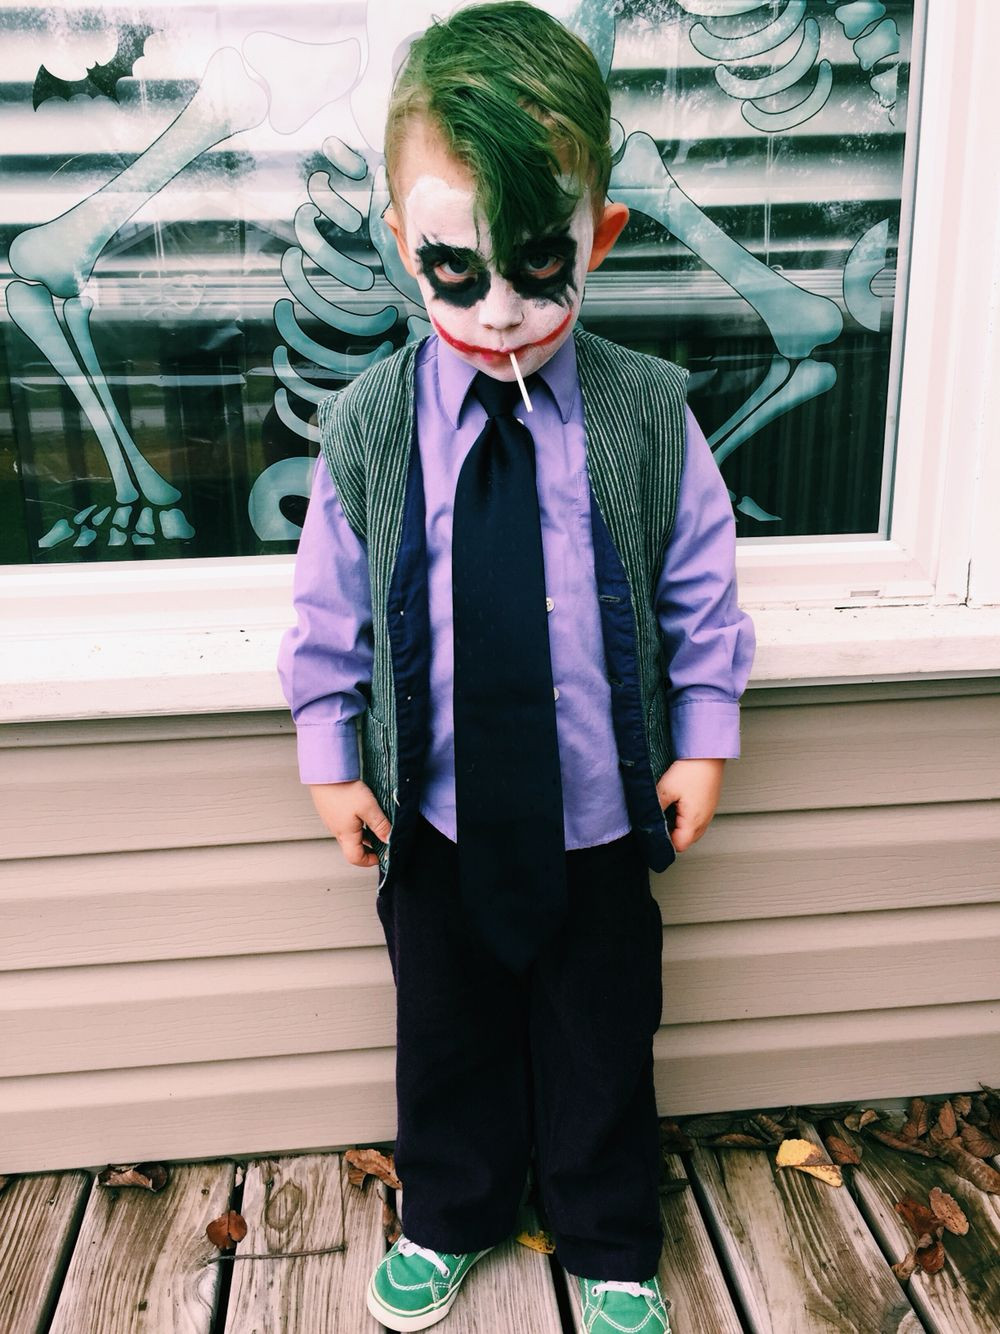 Best ideas about DIY Halloween Costumes Boys
. Save or Pin DIY Joker toddler costume Halloweenie Now.